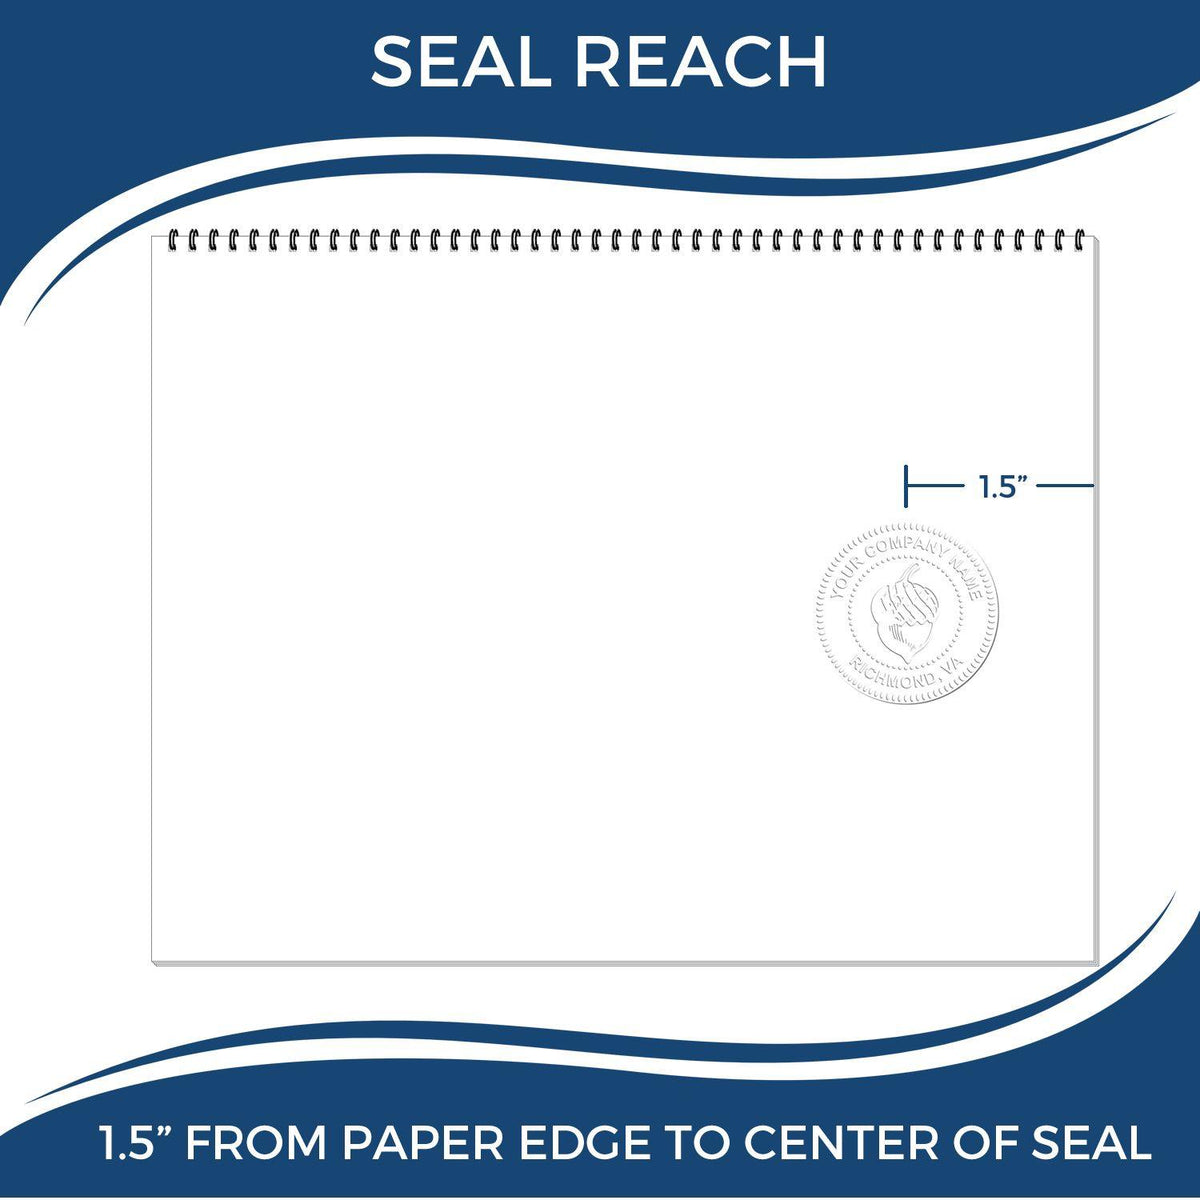 Professional Desk Seal Embosser - Engineer Seal Stamps - Embosser Type_Desk, Type of Use_Professional